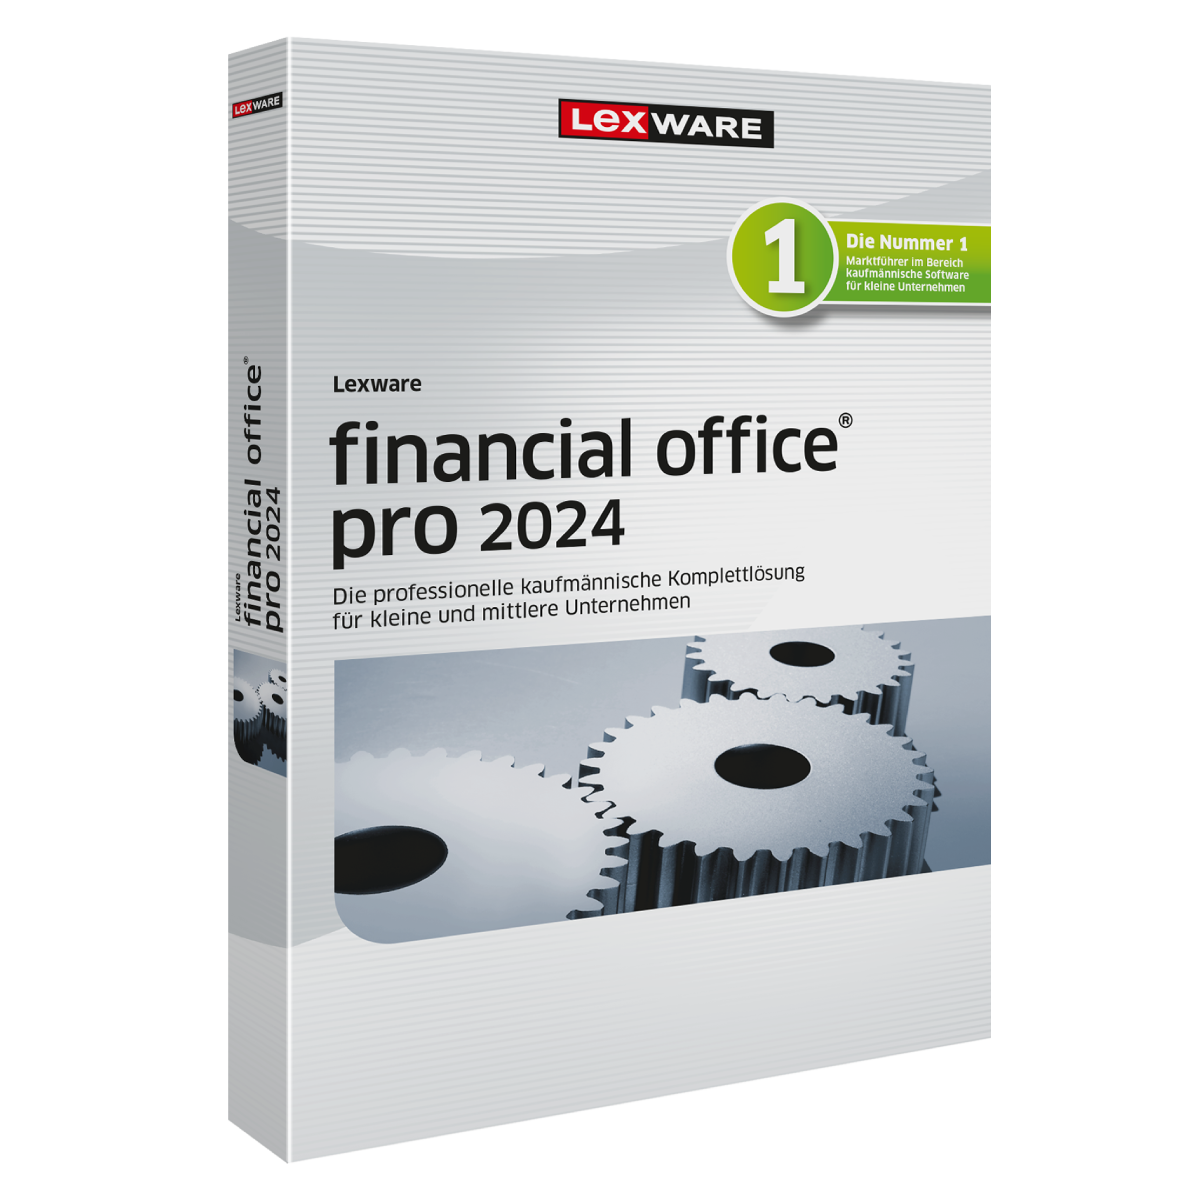 LEXWARE ESD financial office pro 2024 Download Jahresversion